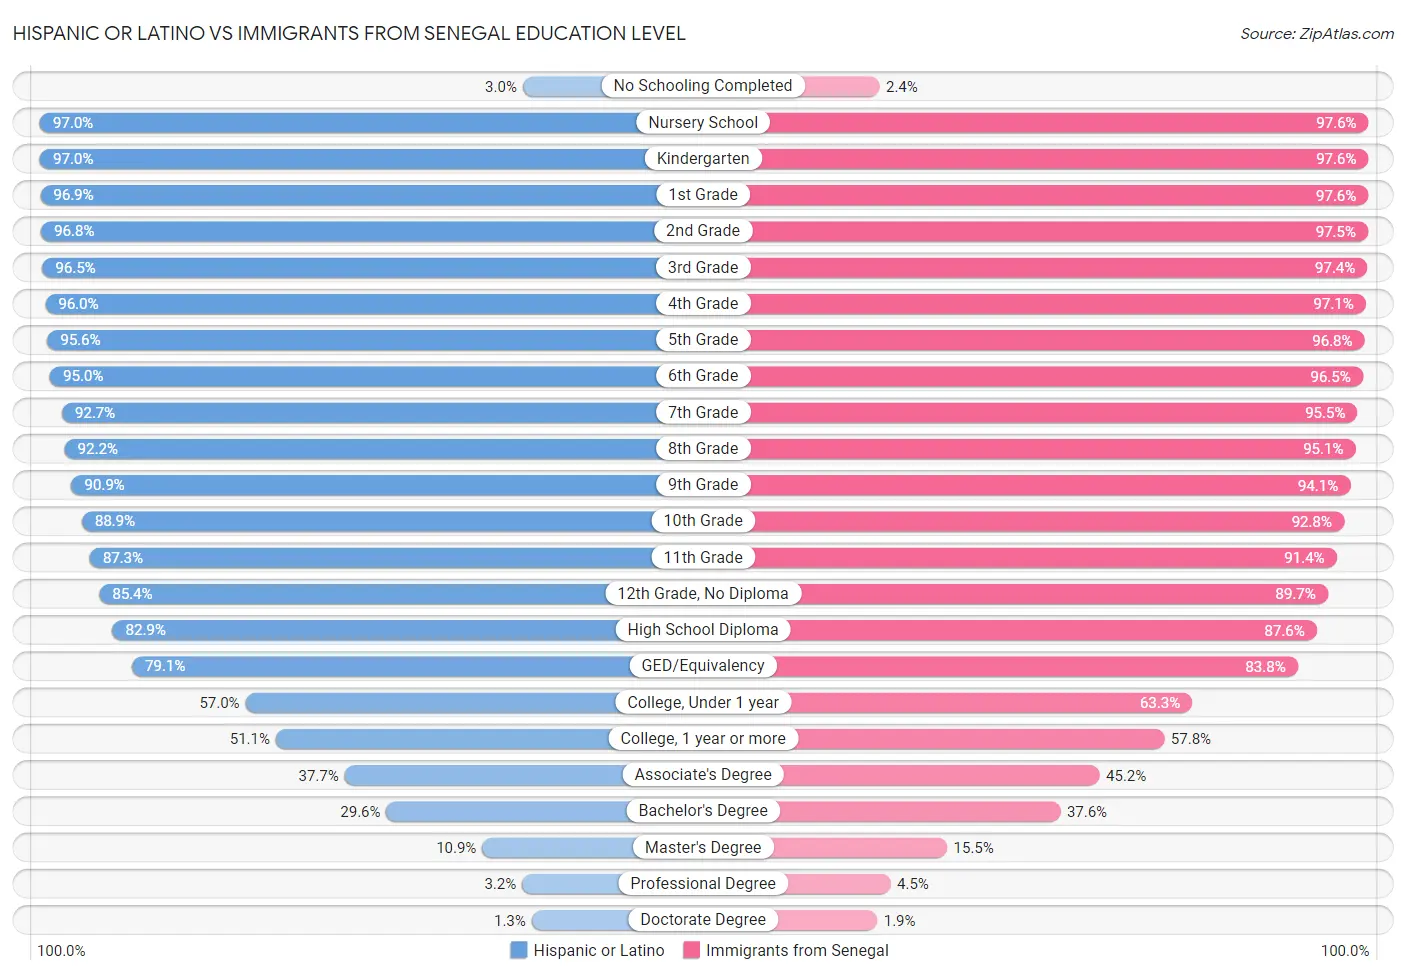 Hispanic or Latino vs Immigrants from Senegal Education Level